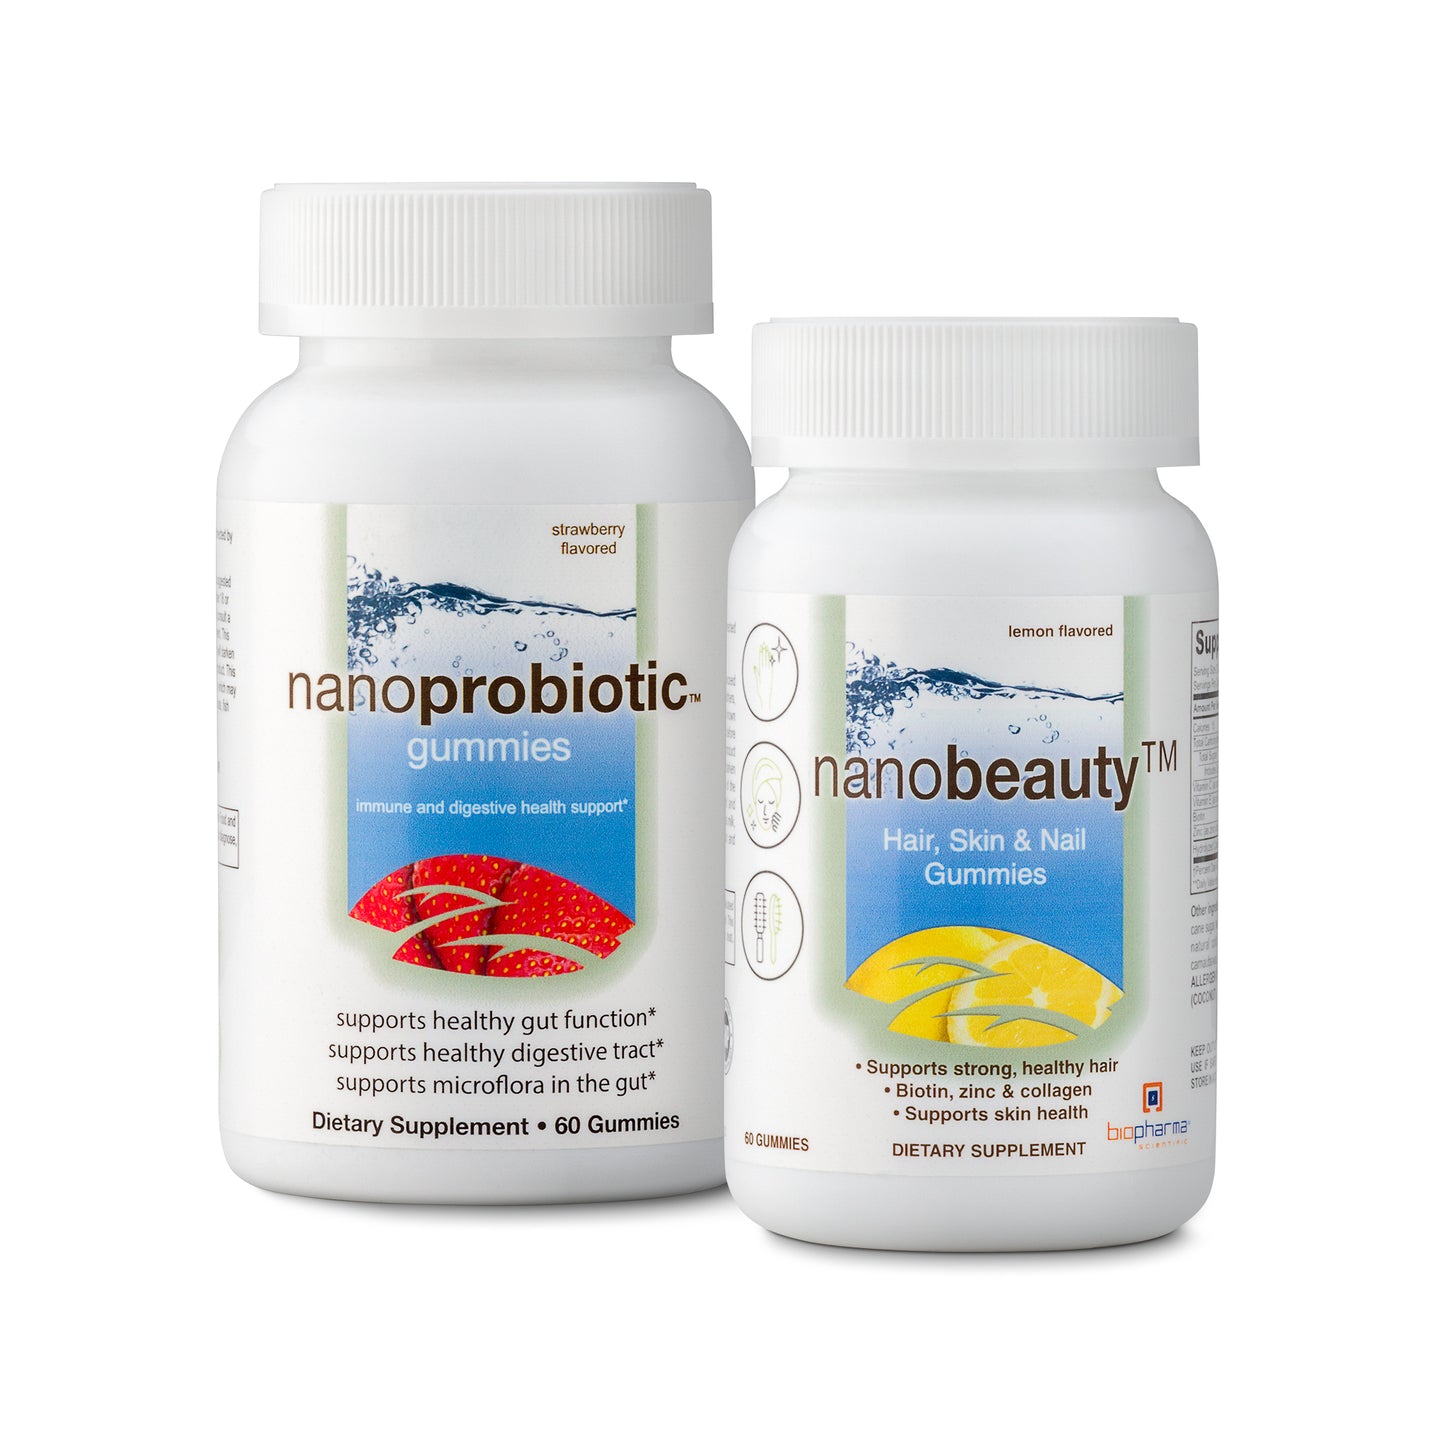 nanoprobiotic probiotic immunity health gummies and nanobeauty hair skin and nails gummies supplements